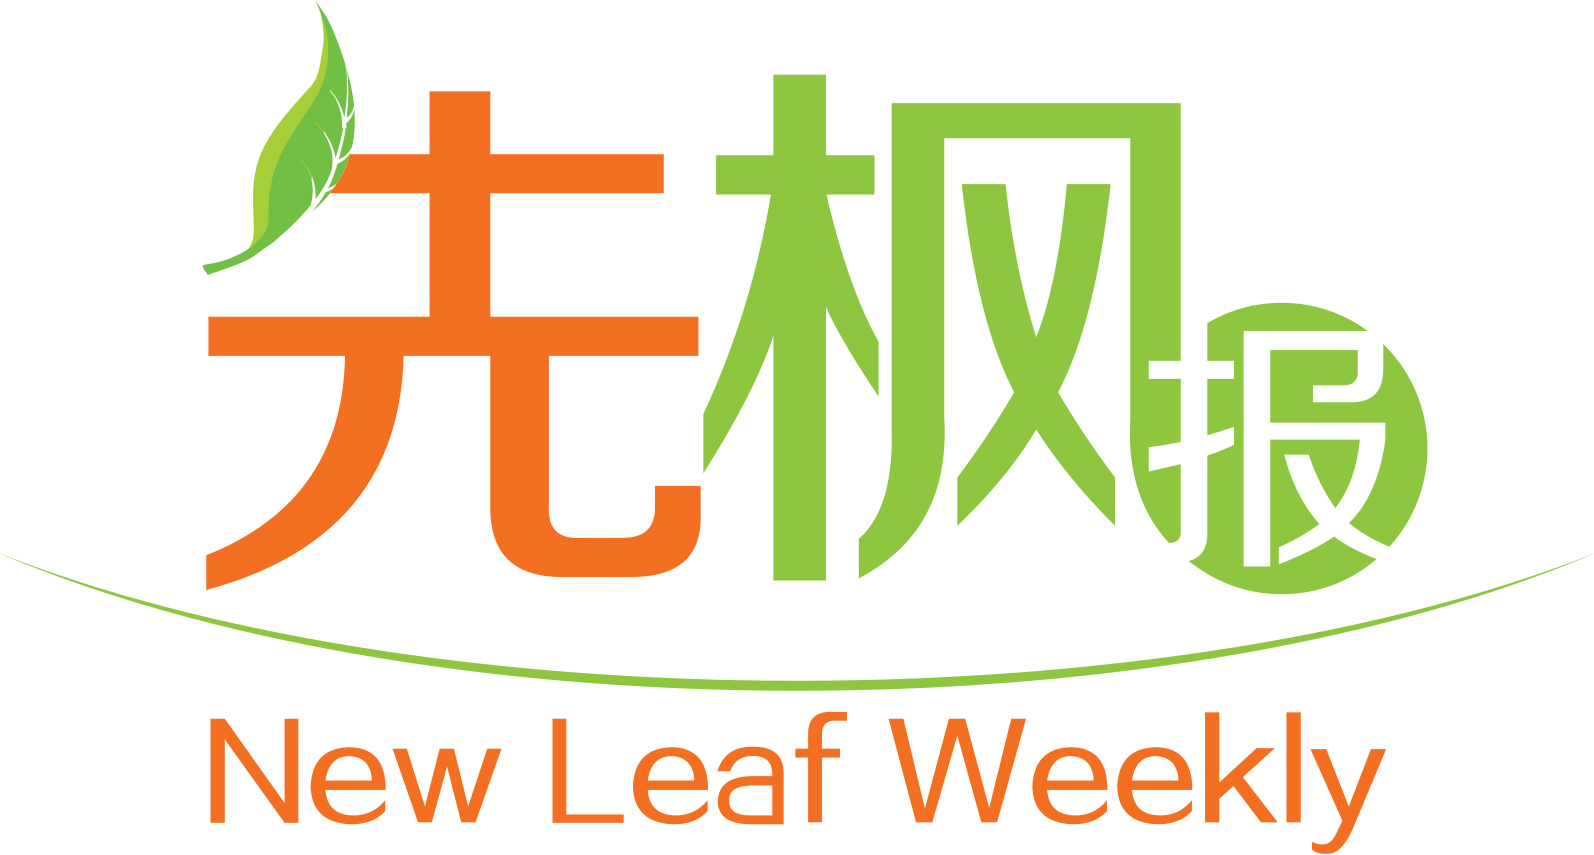 New Leaf Weekly